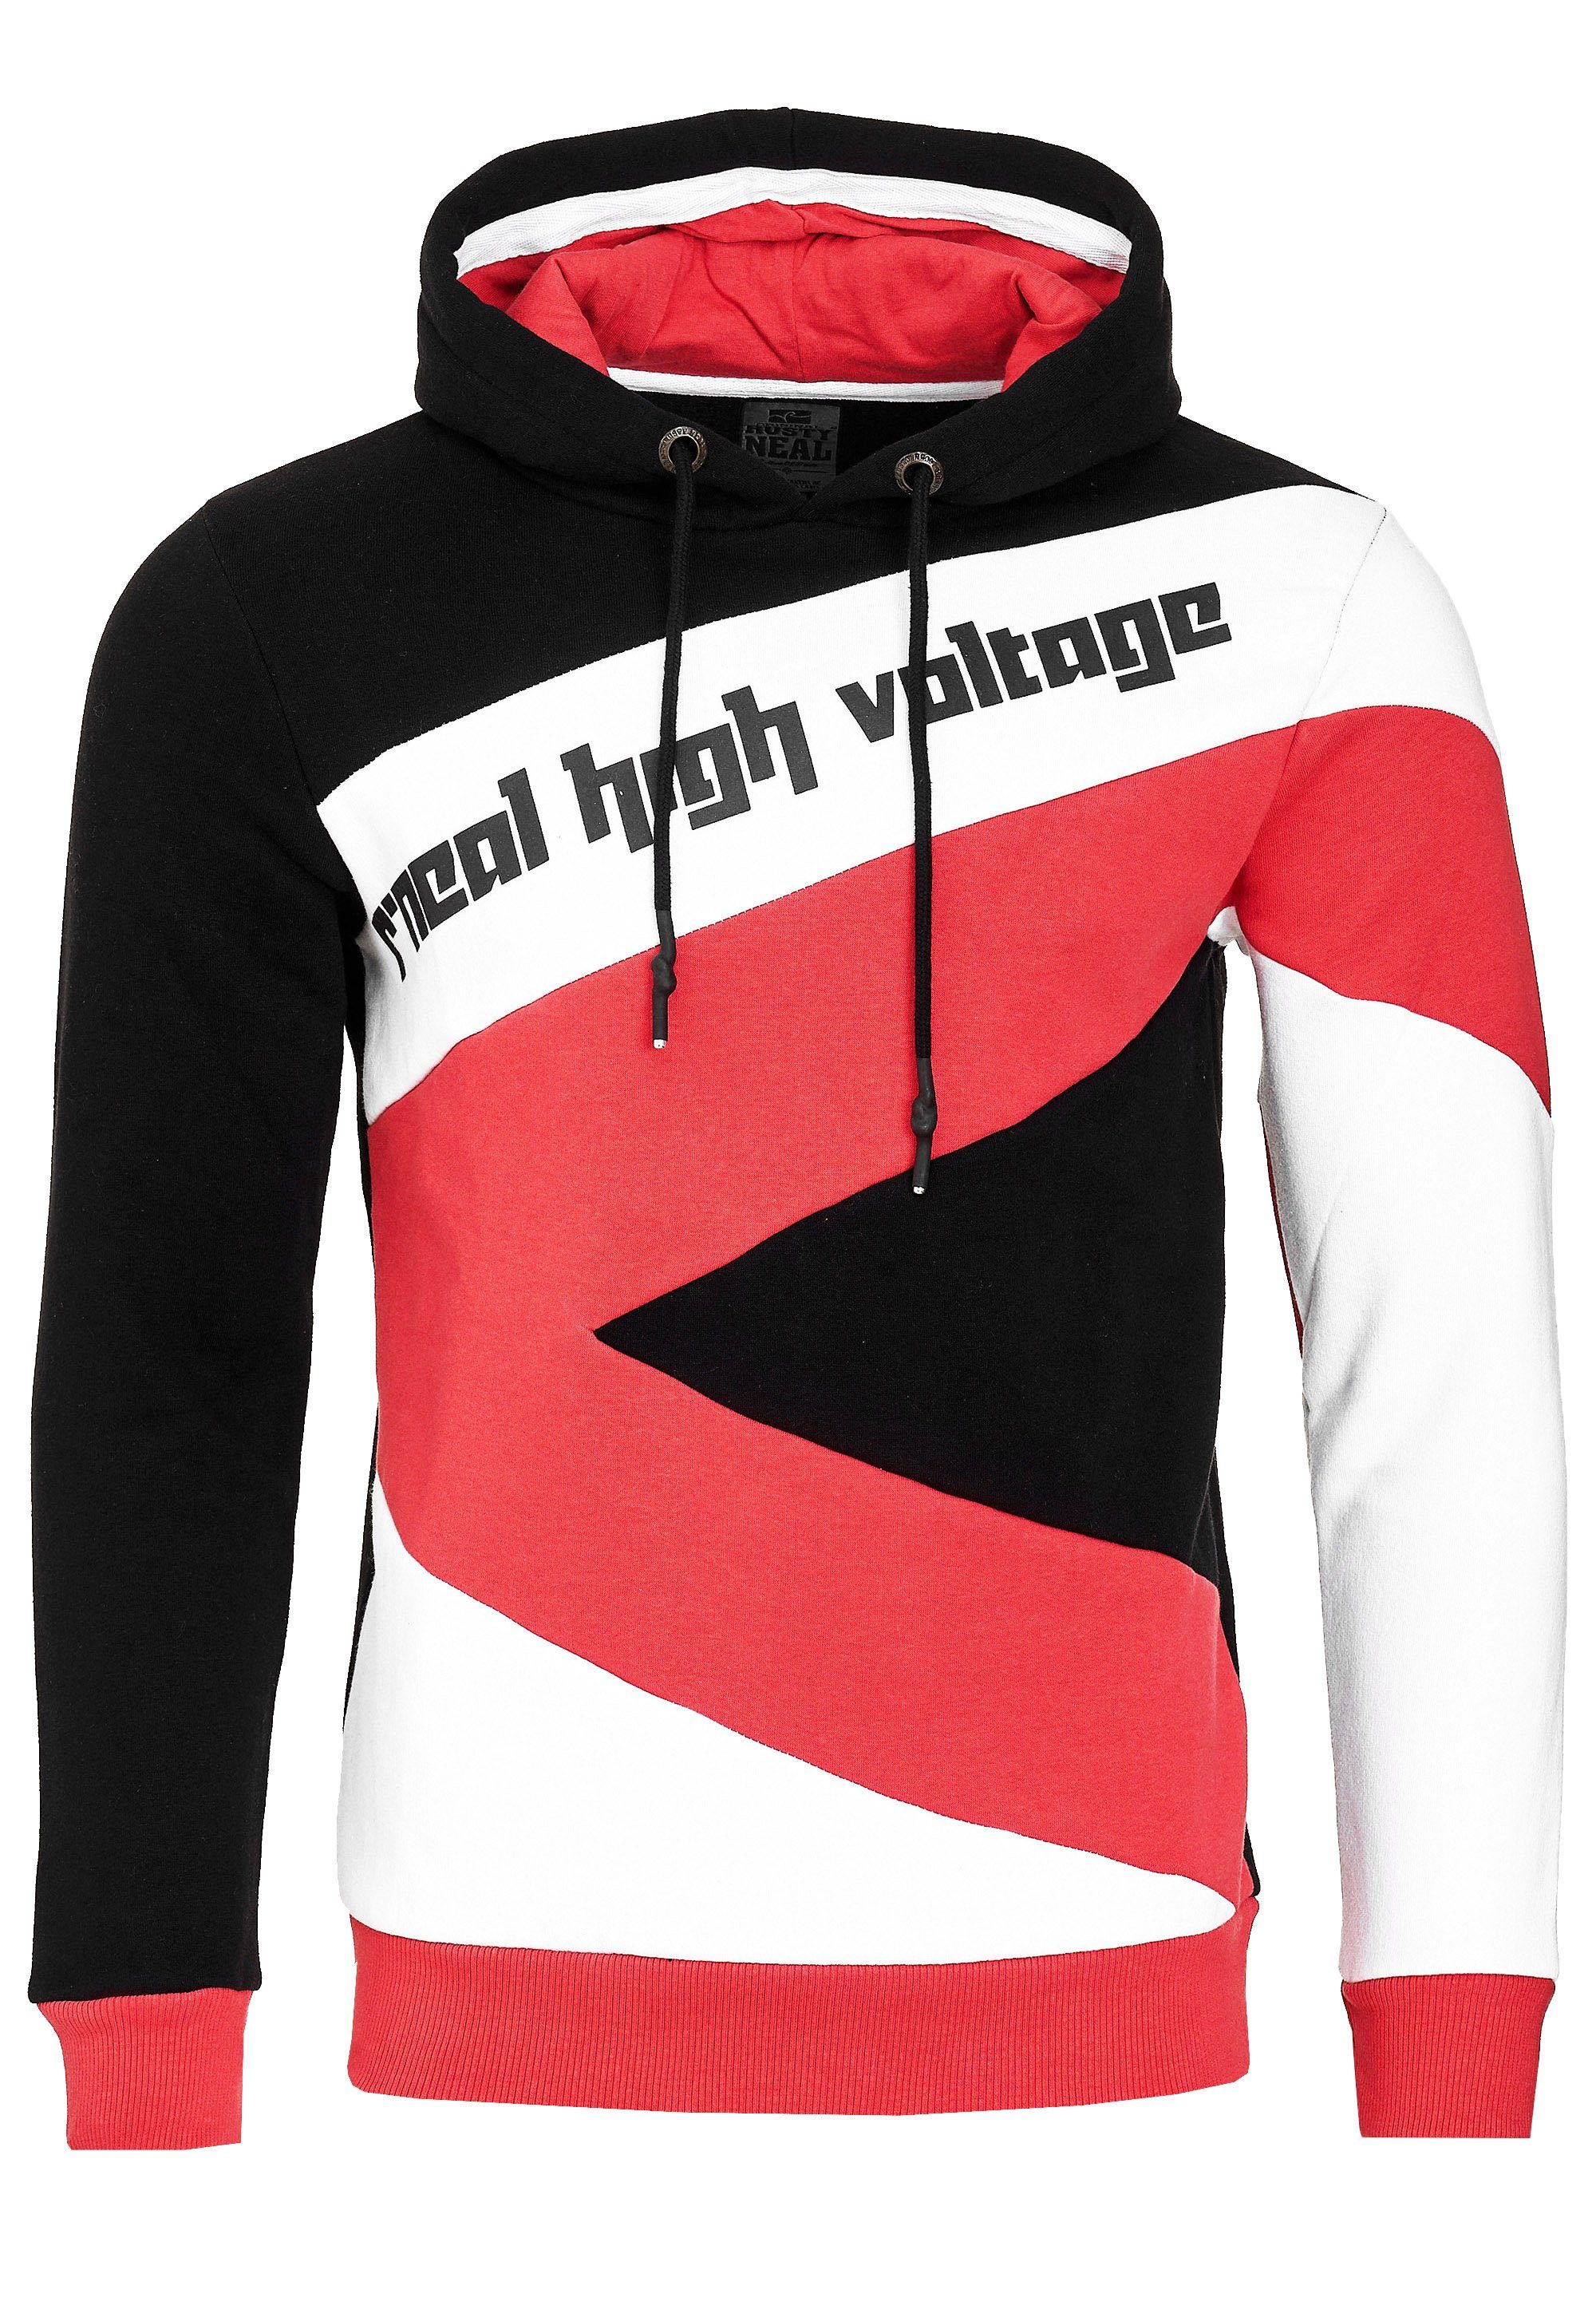 Rusty Neal Kapuzensweatshirt in schwarz-rot Design sportlichem